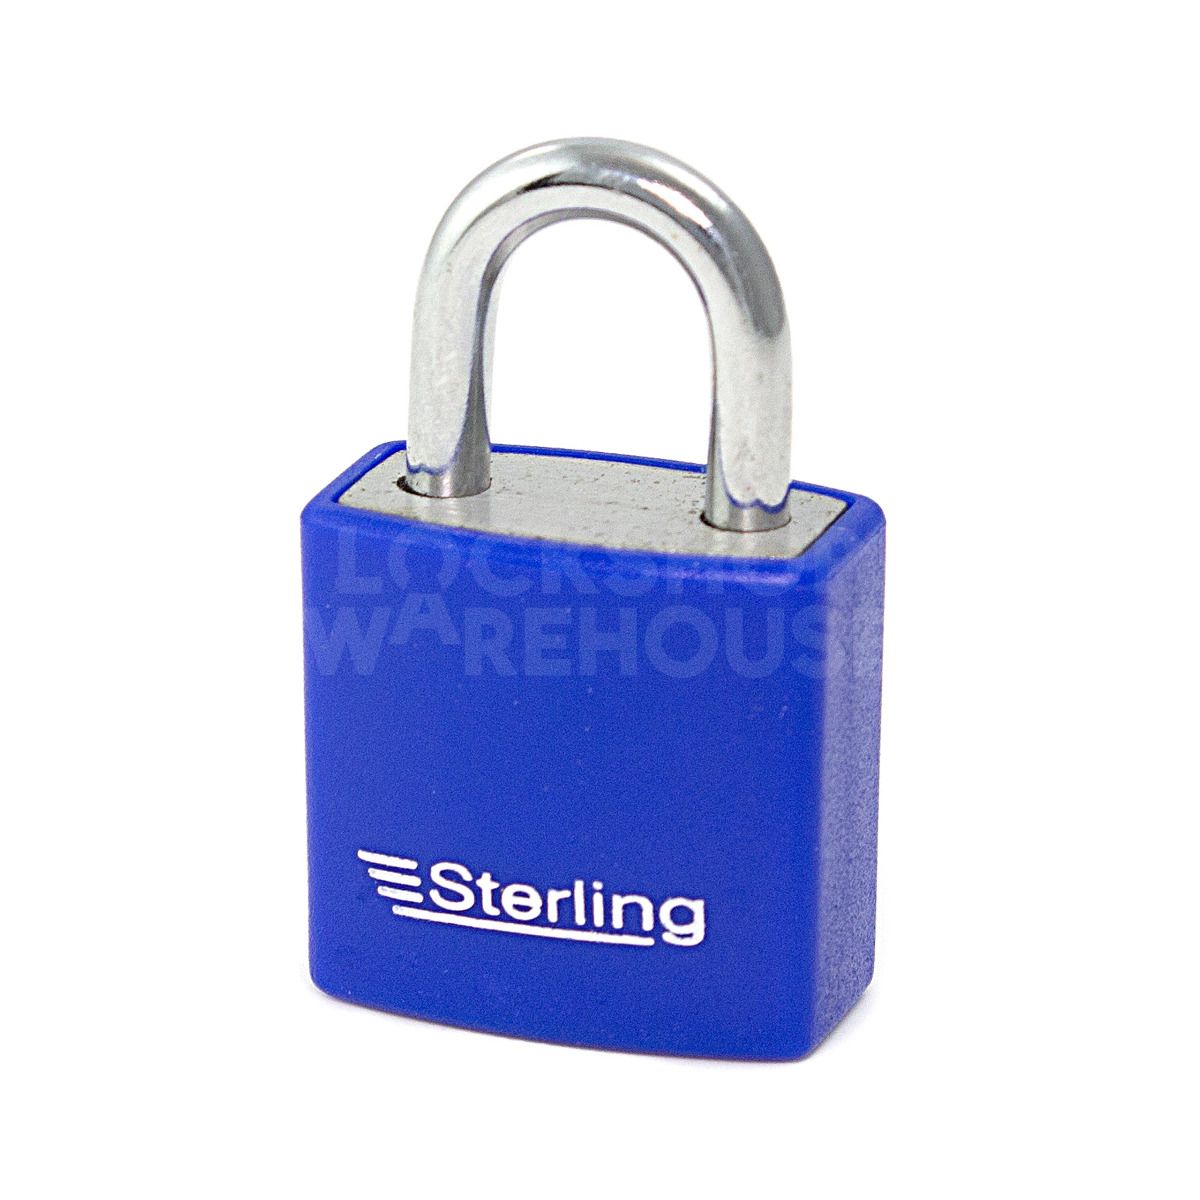 Sterling Aluminium Padlock 20mm Key Locking